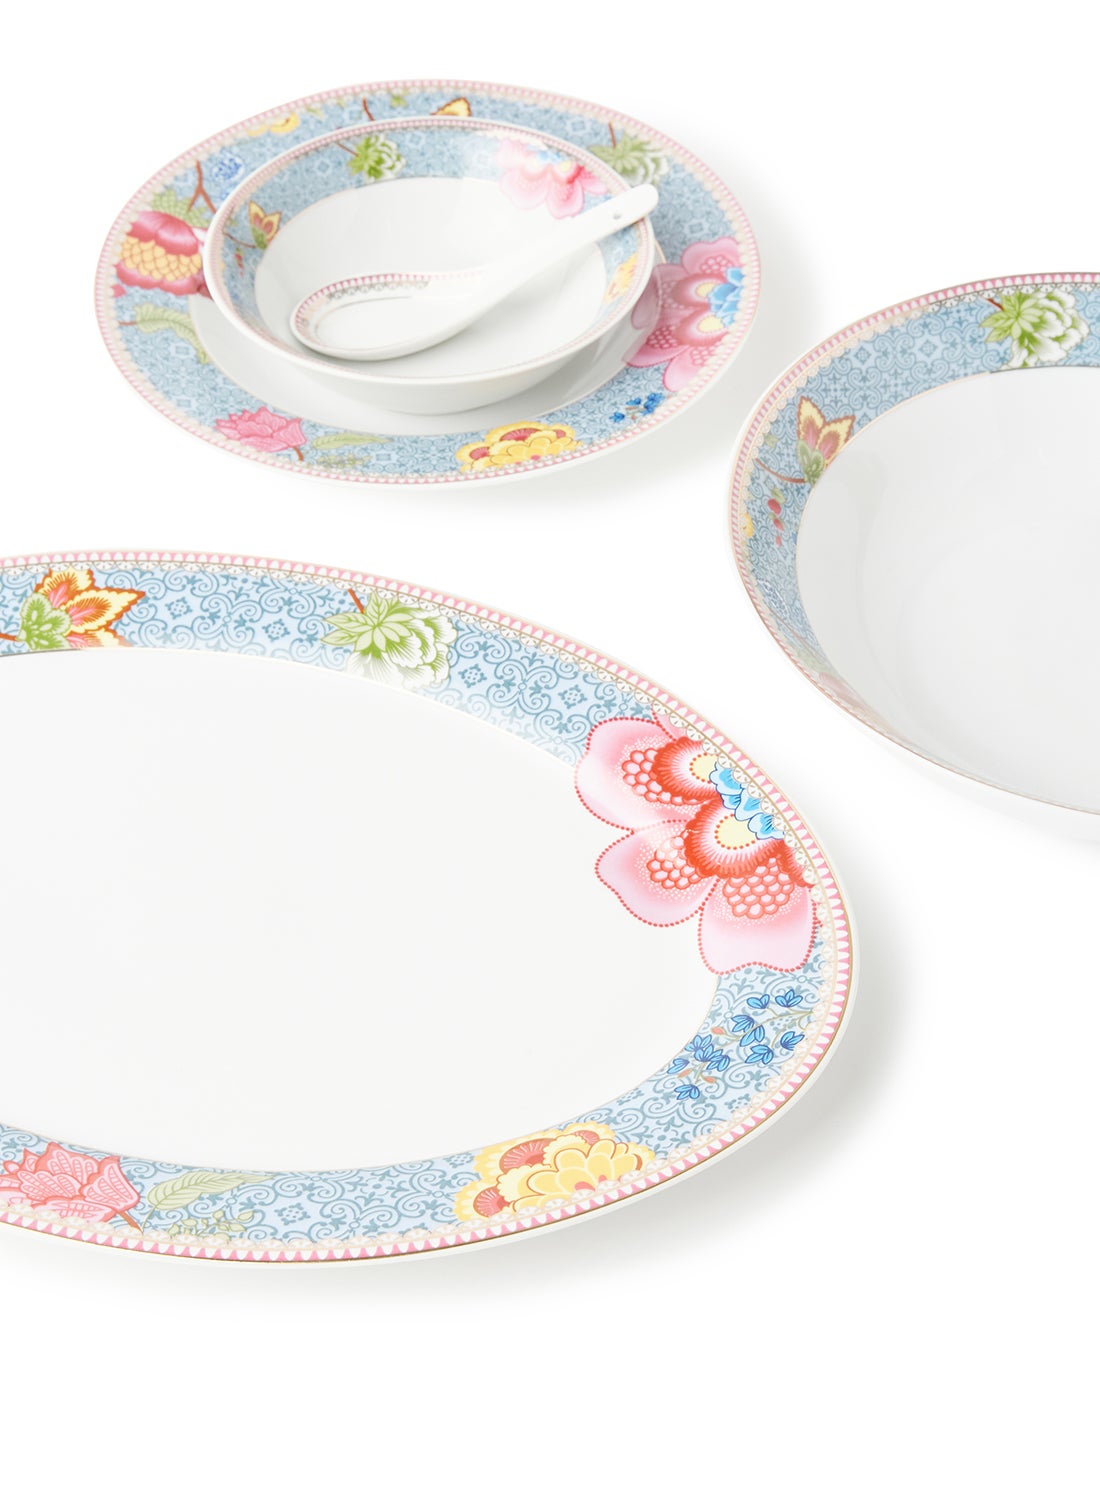 56 Piece Porcelain Dinner Set - Dishes, Plates - Dinner Plate, Side Plate, Bowl, Cups, Serving Dish And Bowl - Serves 6 - Festive Design Bloom 